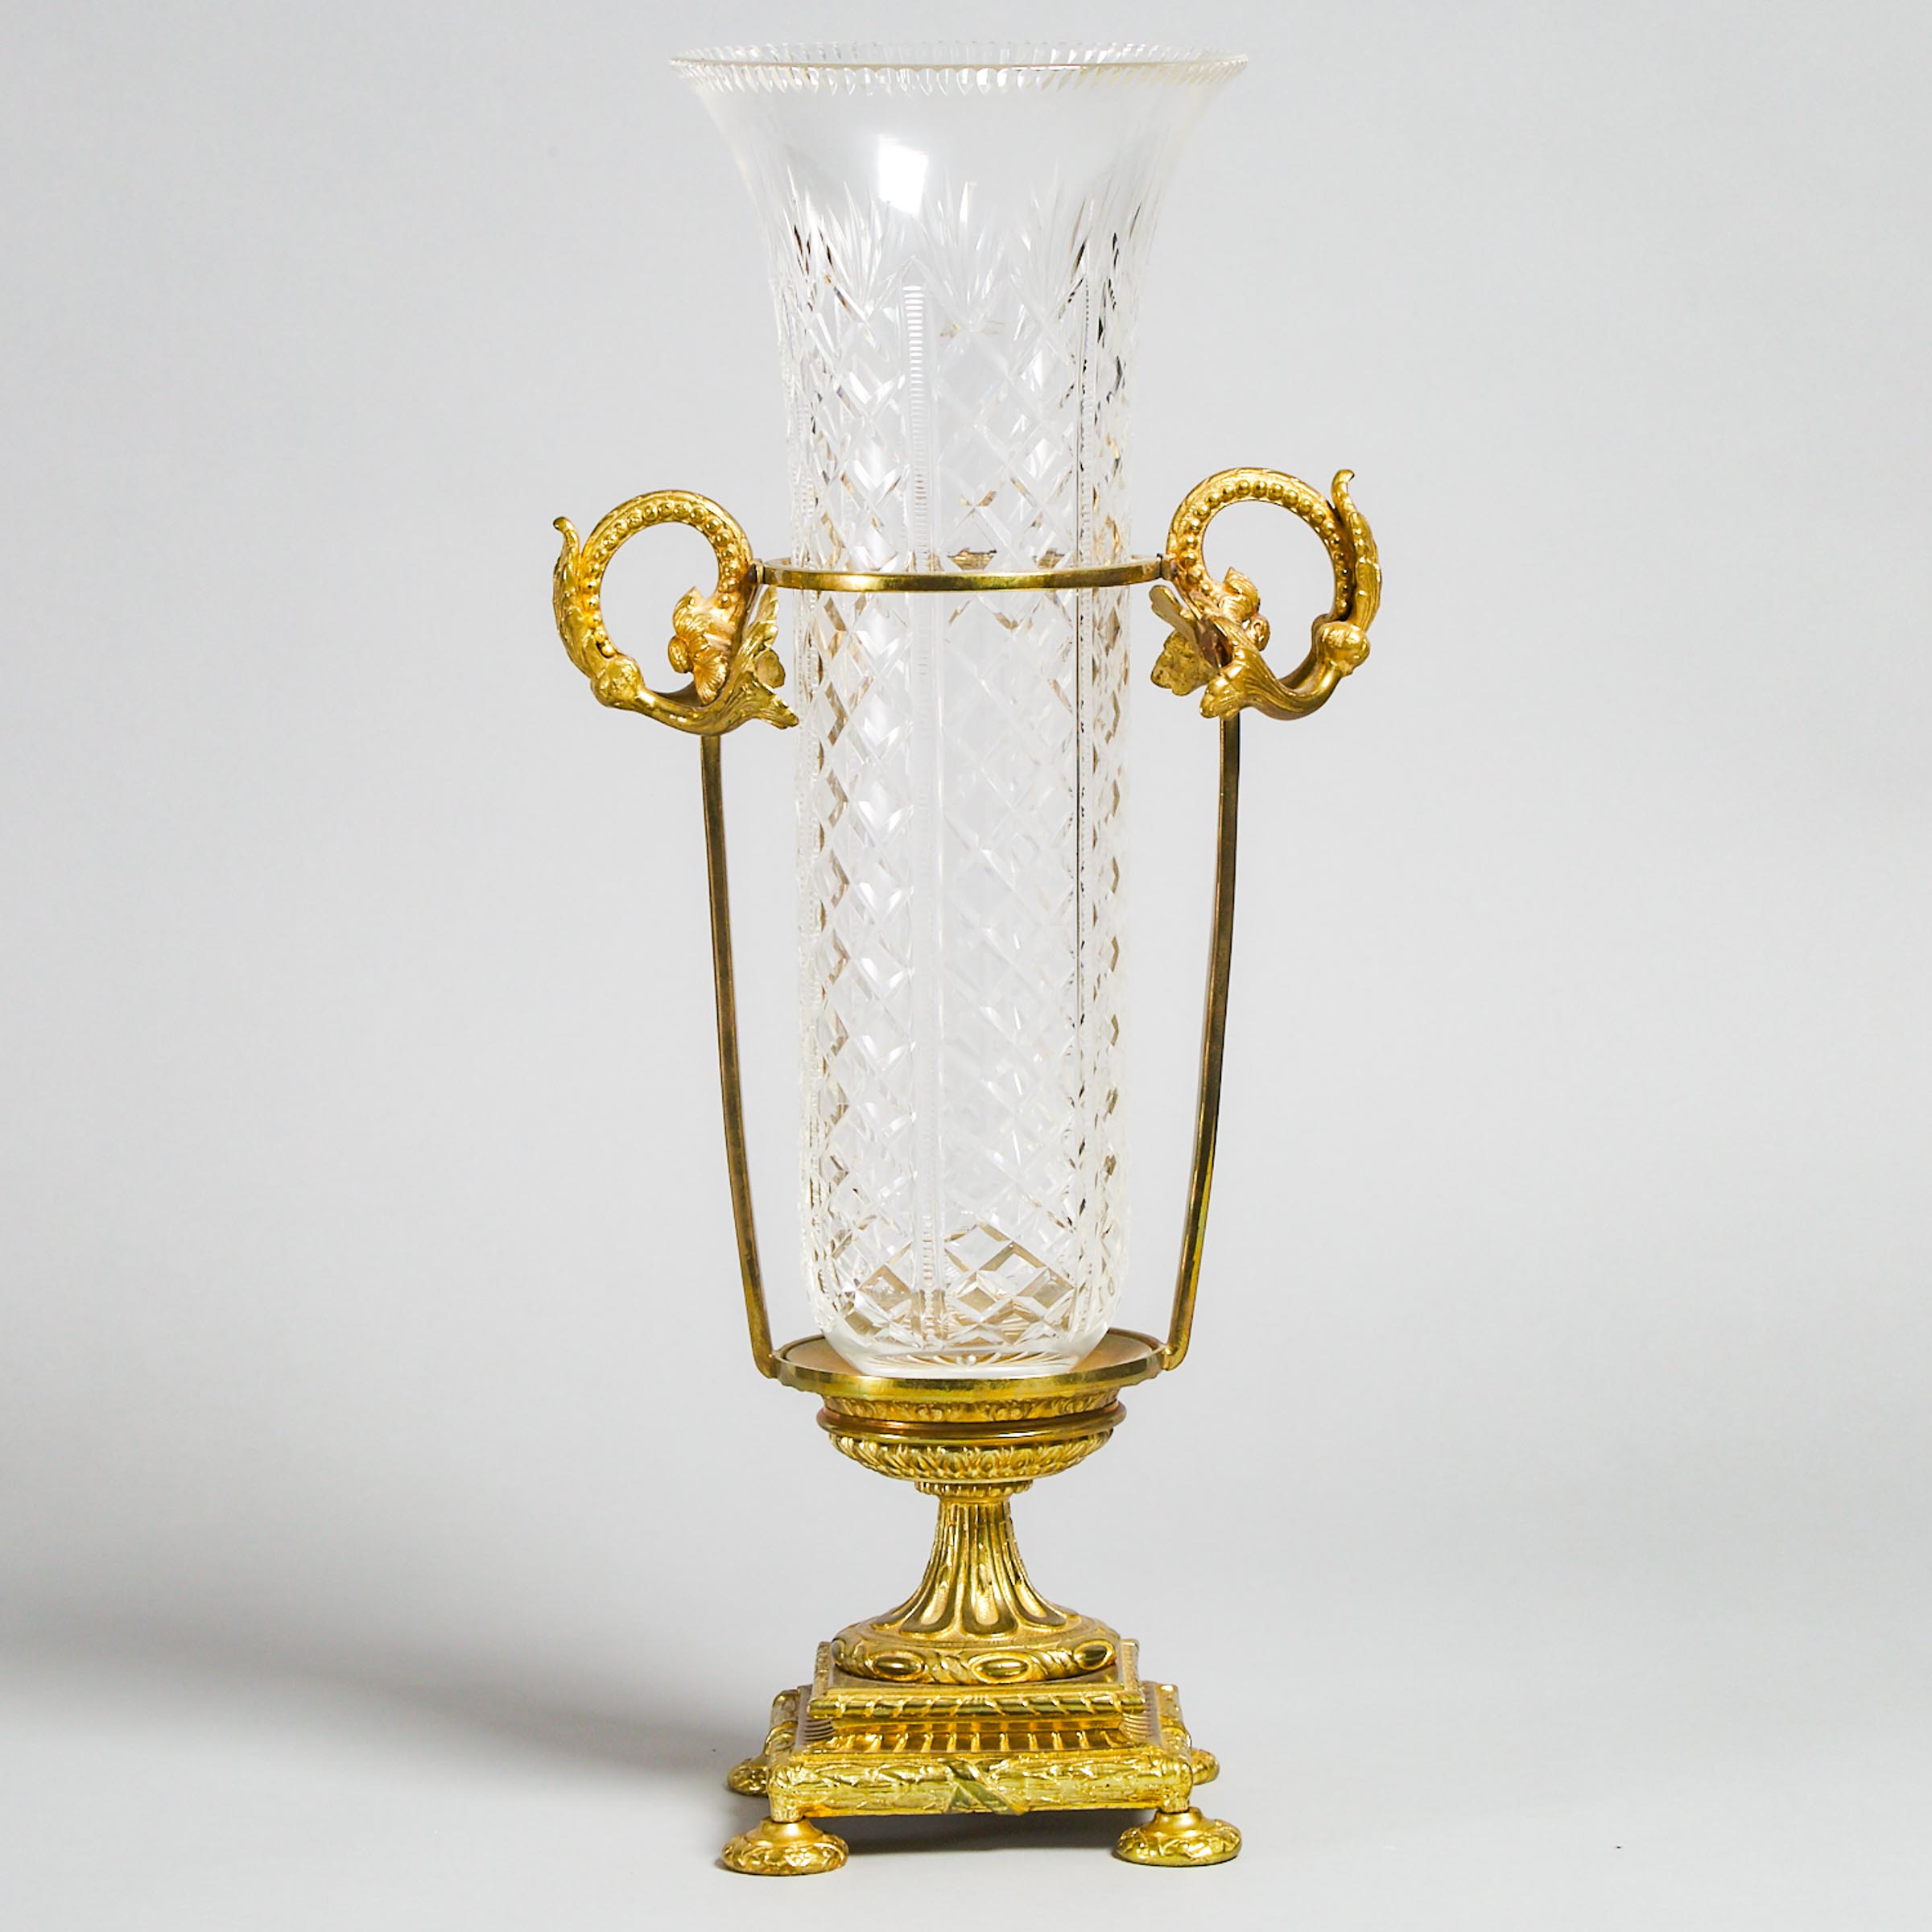 Austrian Gilt Bronze Mounted Cut Glass Vase, early-mid 20th century